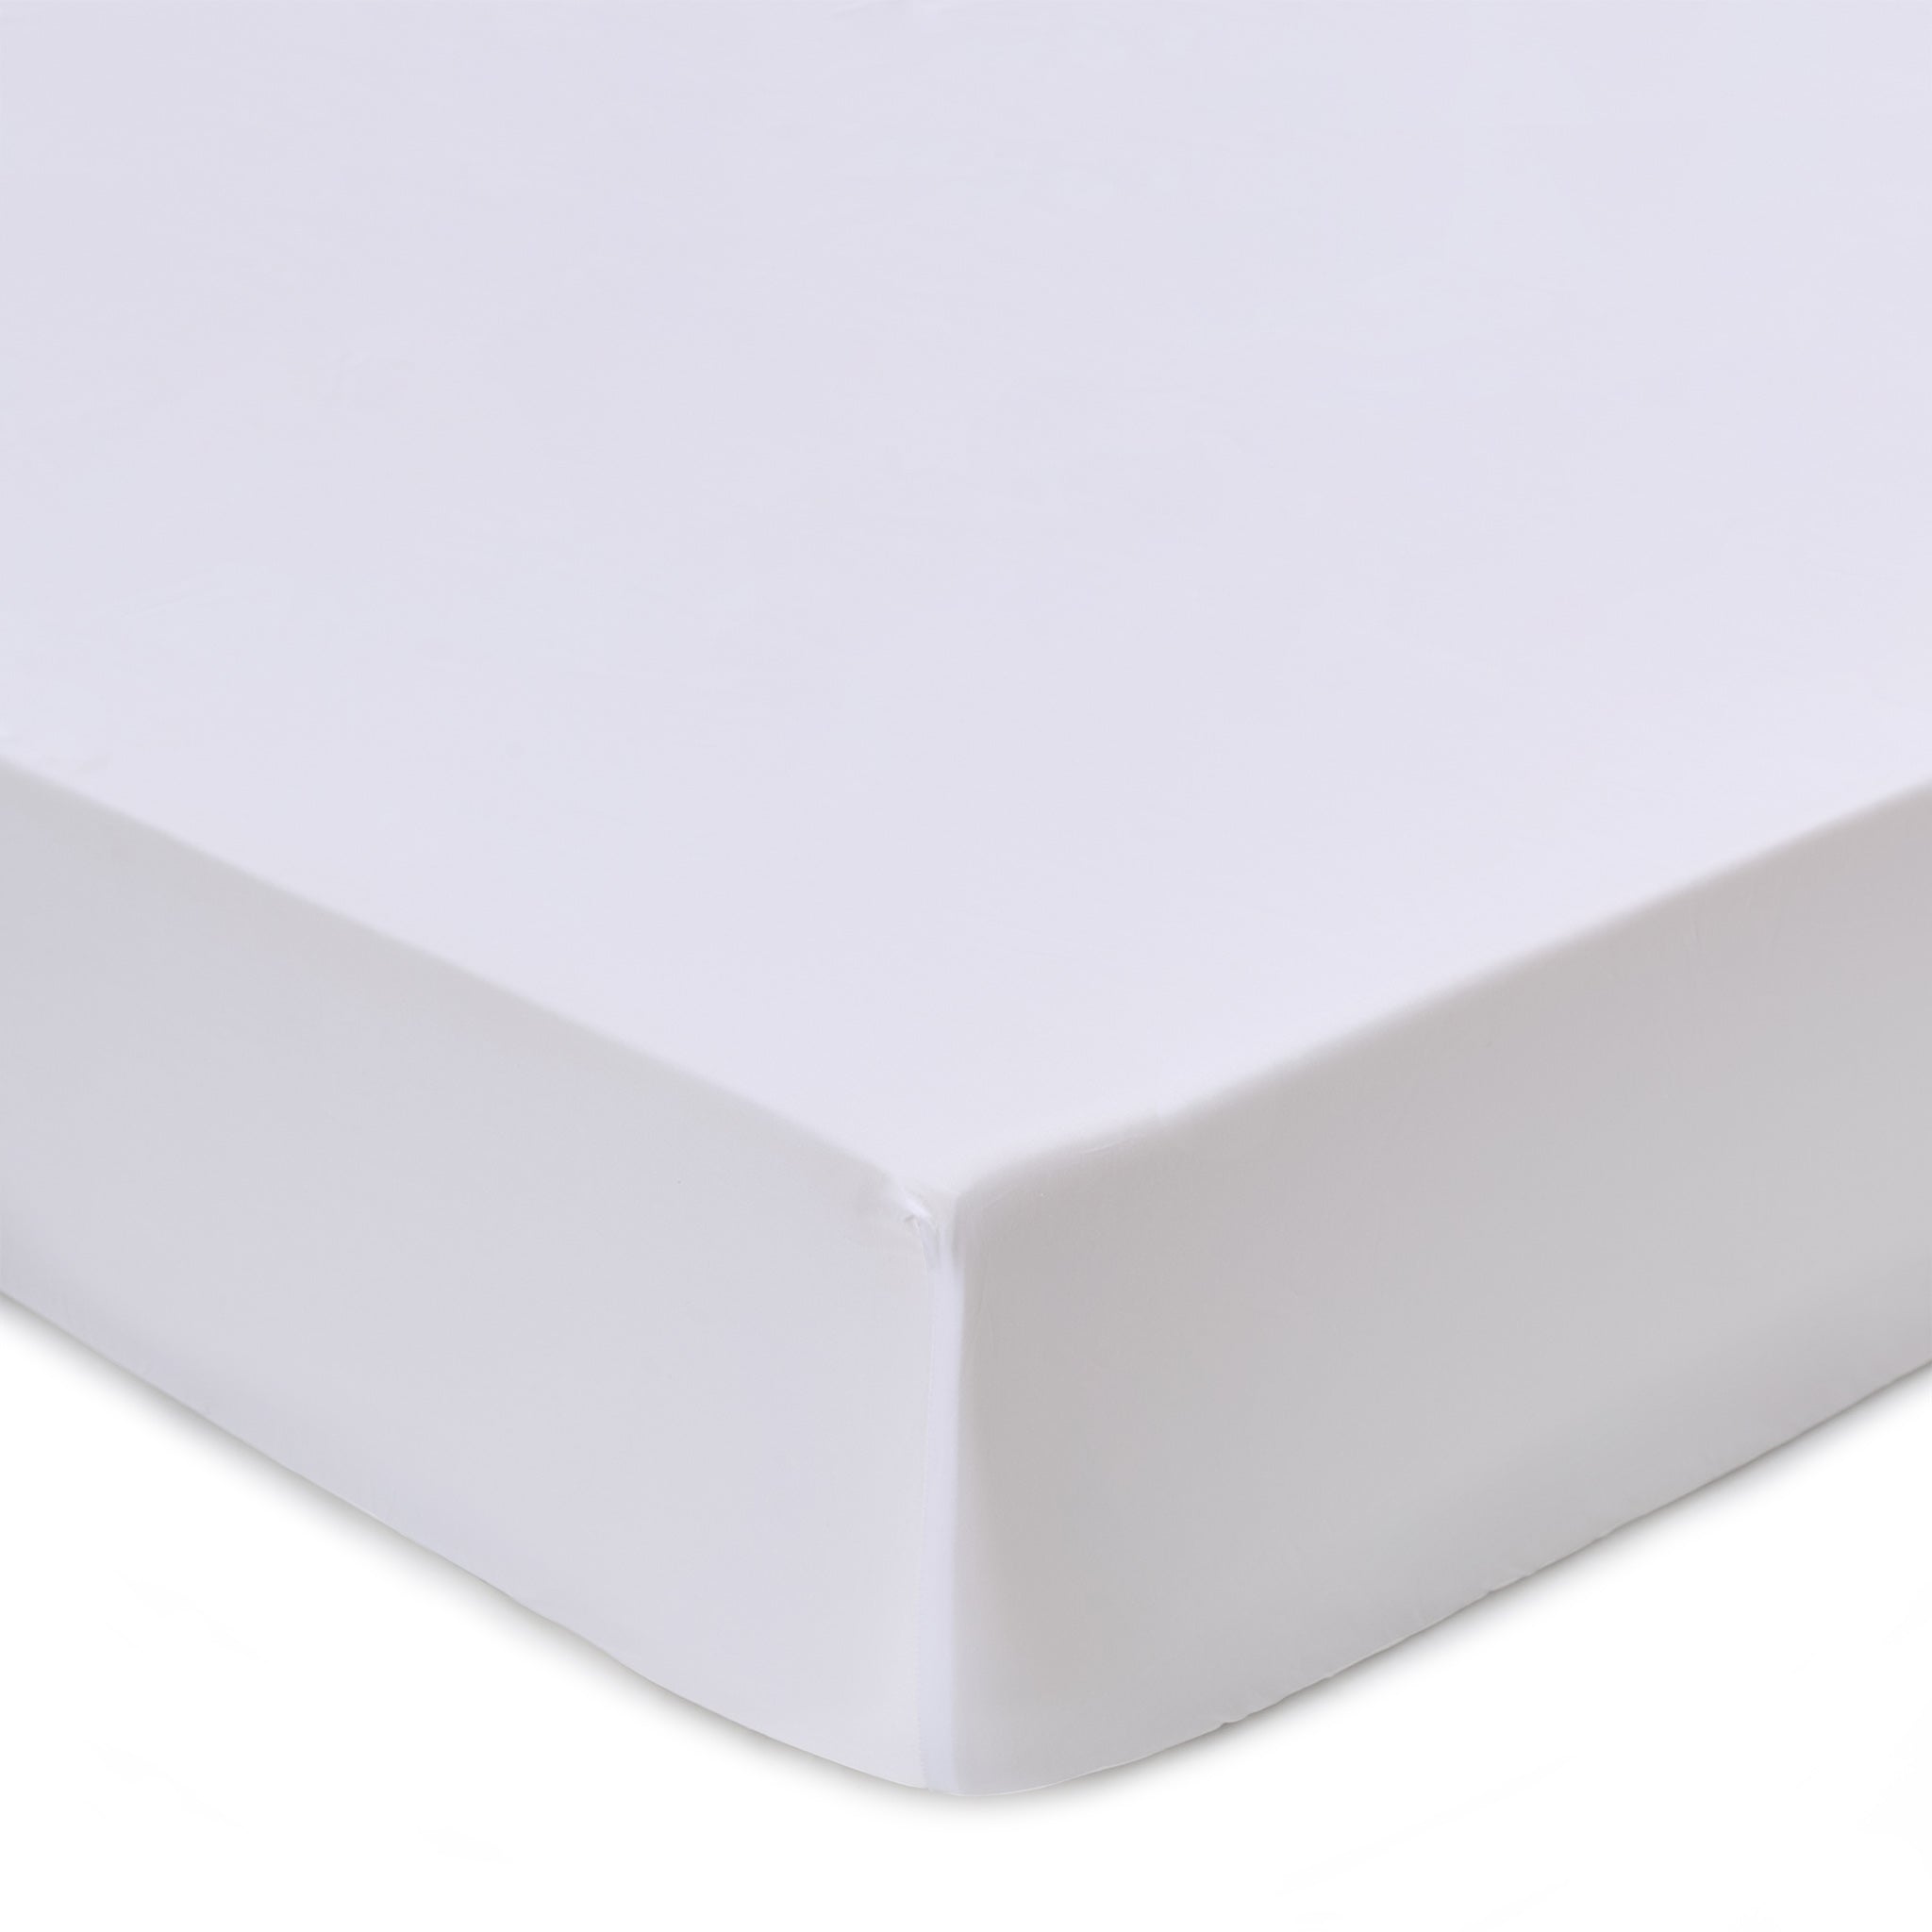 Vivy Fitted Sheet, white, 100% cotton | URBANARA